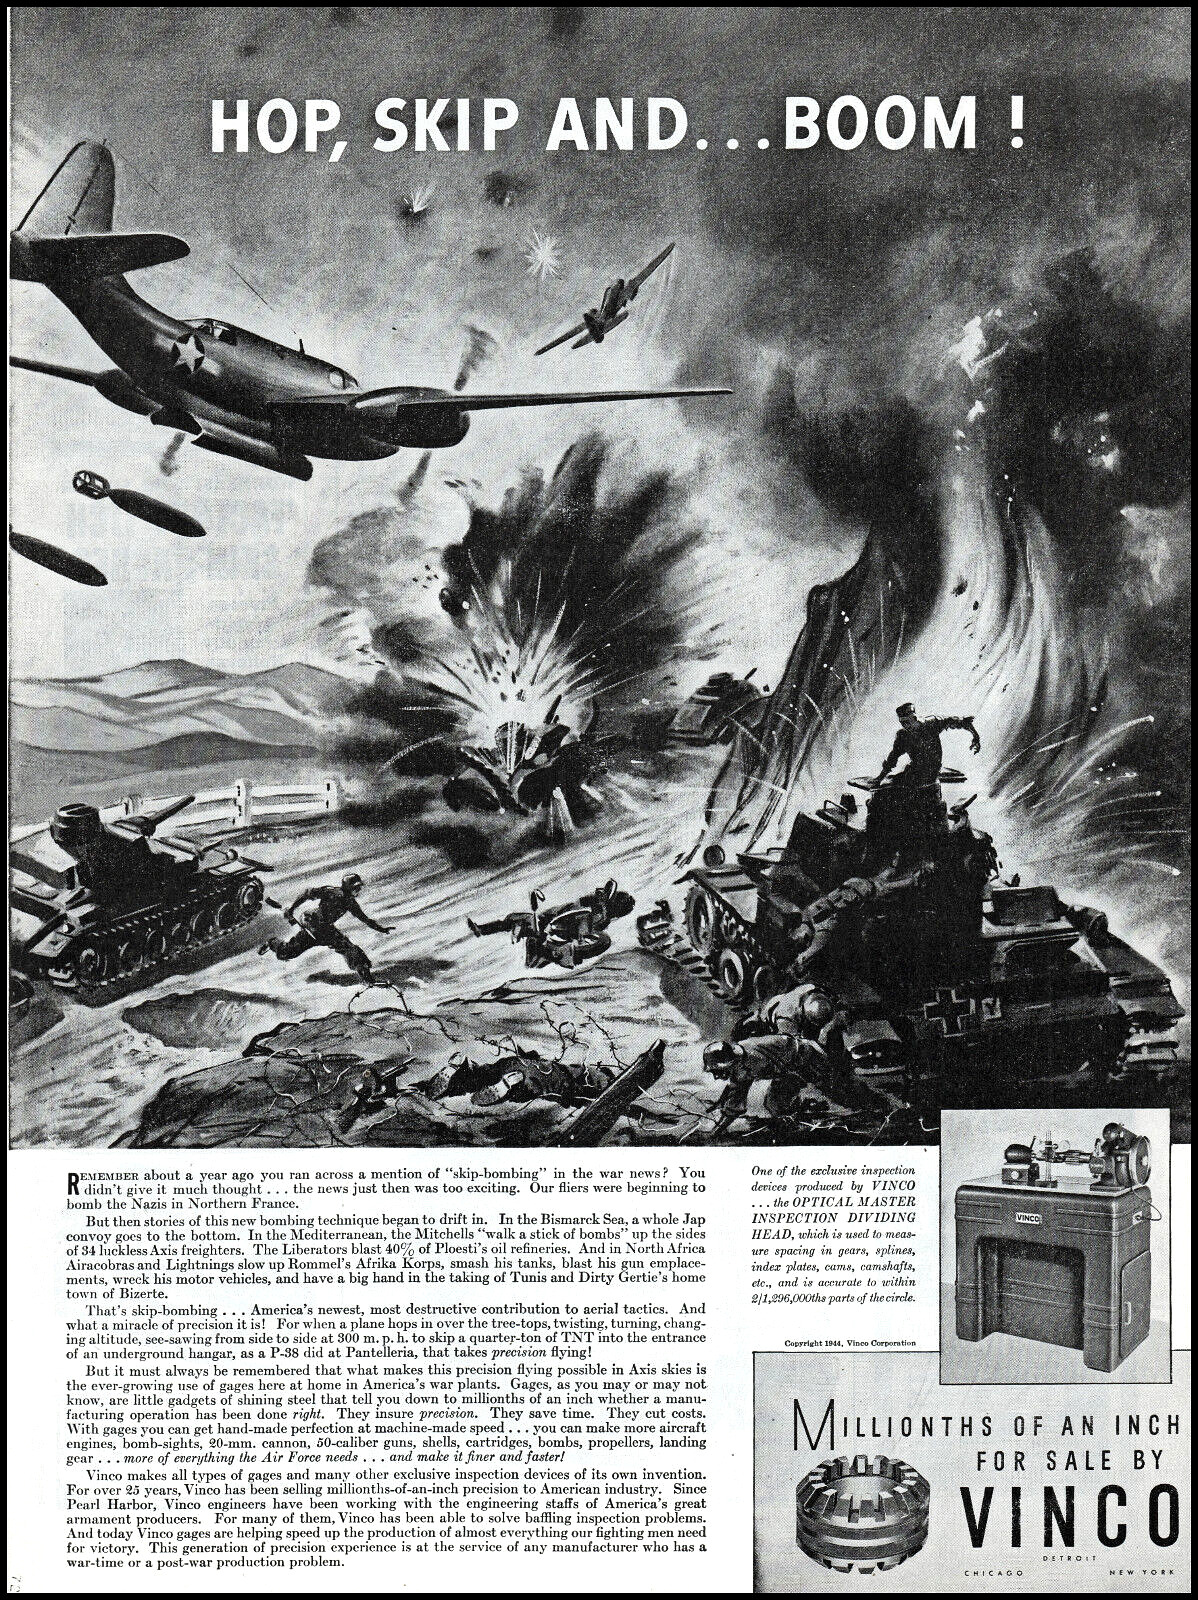 1944 WW2 U S Skip-Bombing in Northern France Vinco vintage art print ad L27